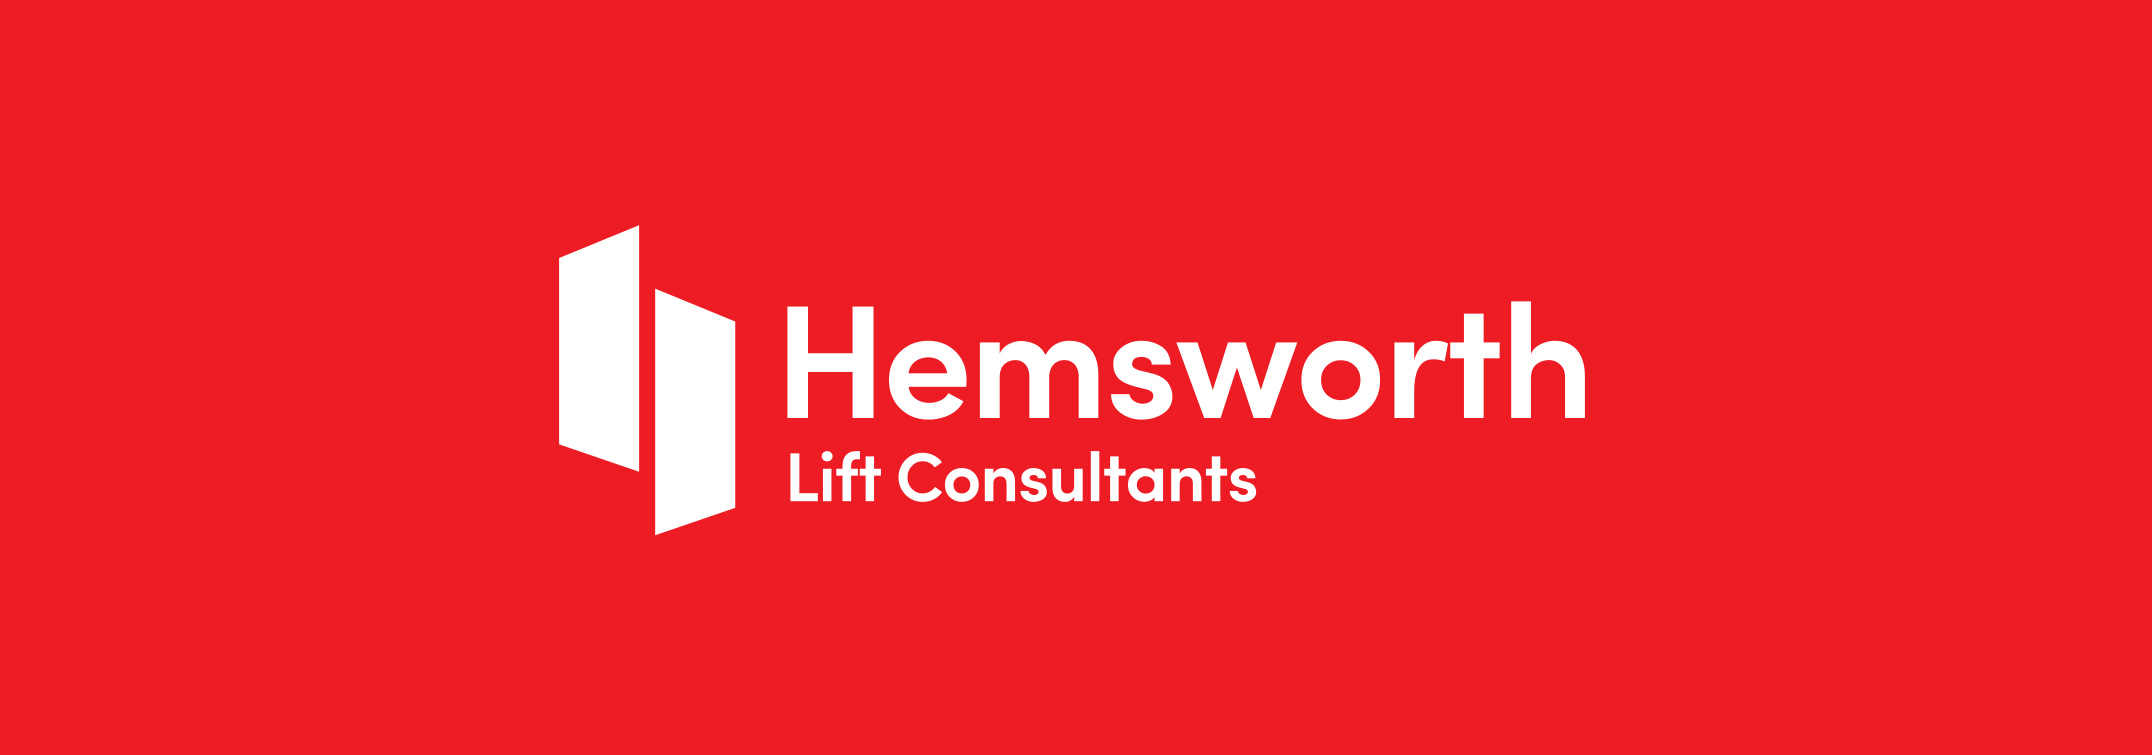 Hemsworth Lift Consultants